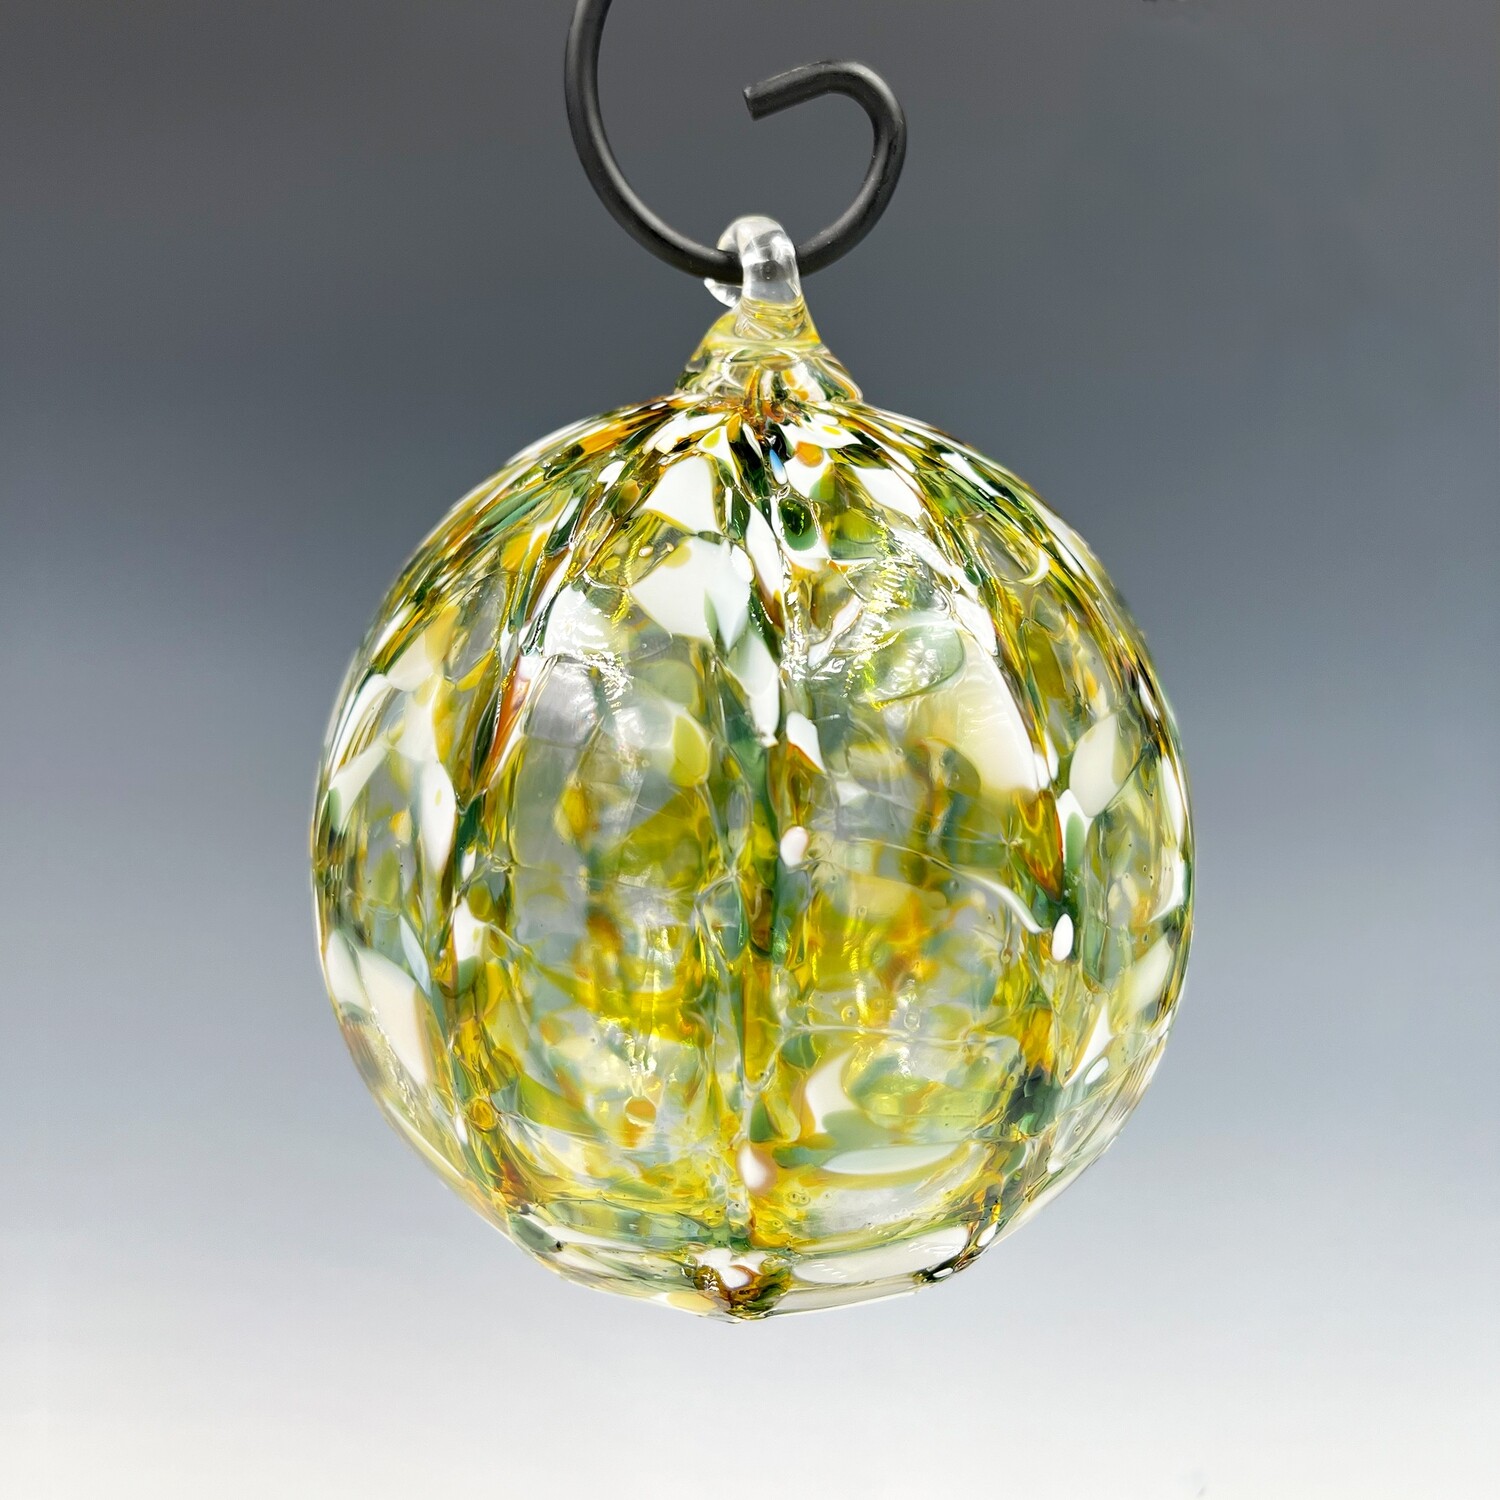 Glass Ornament in Mistletoe Mix